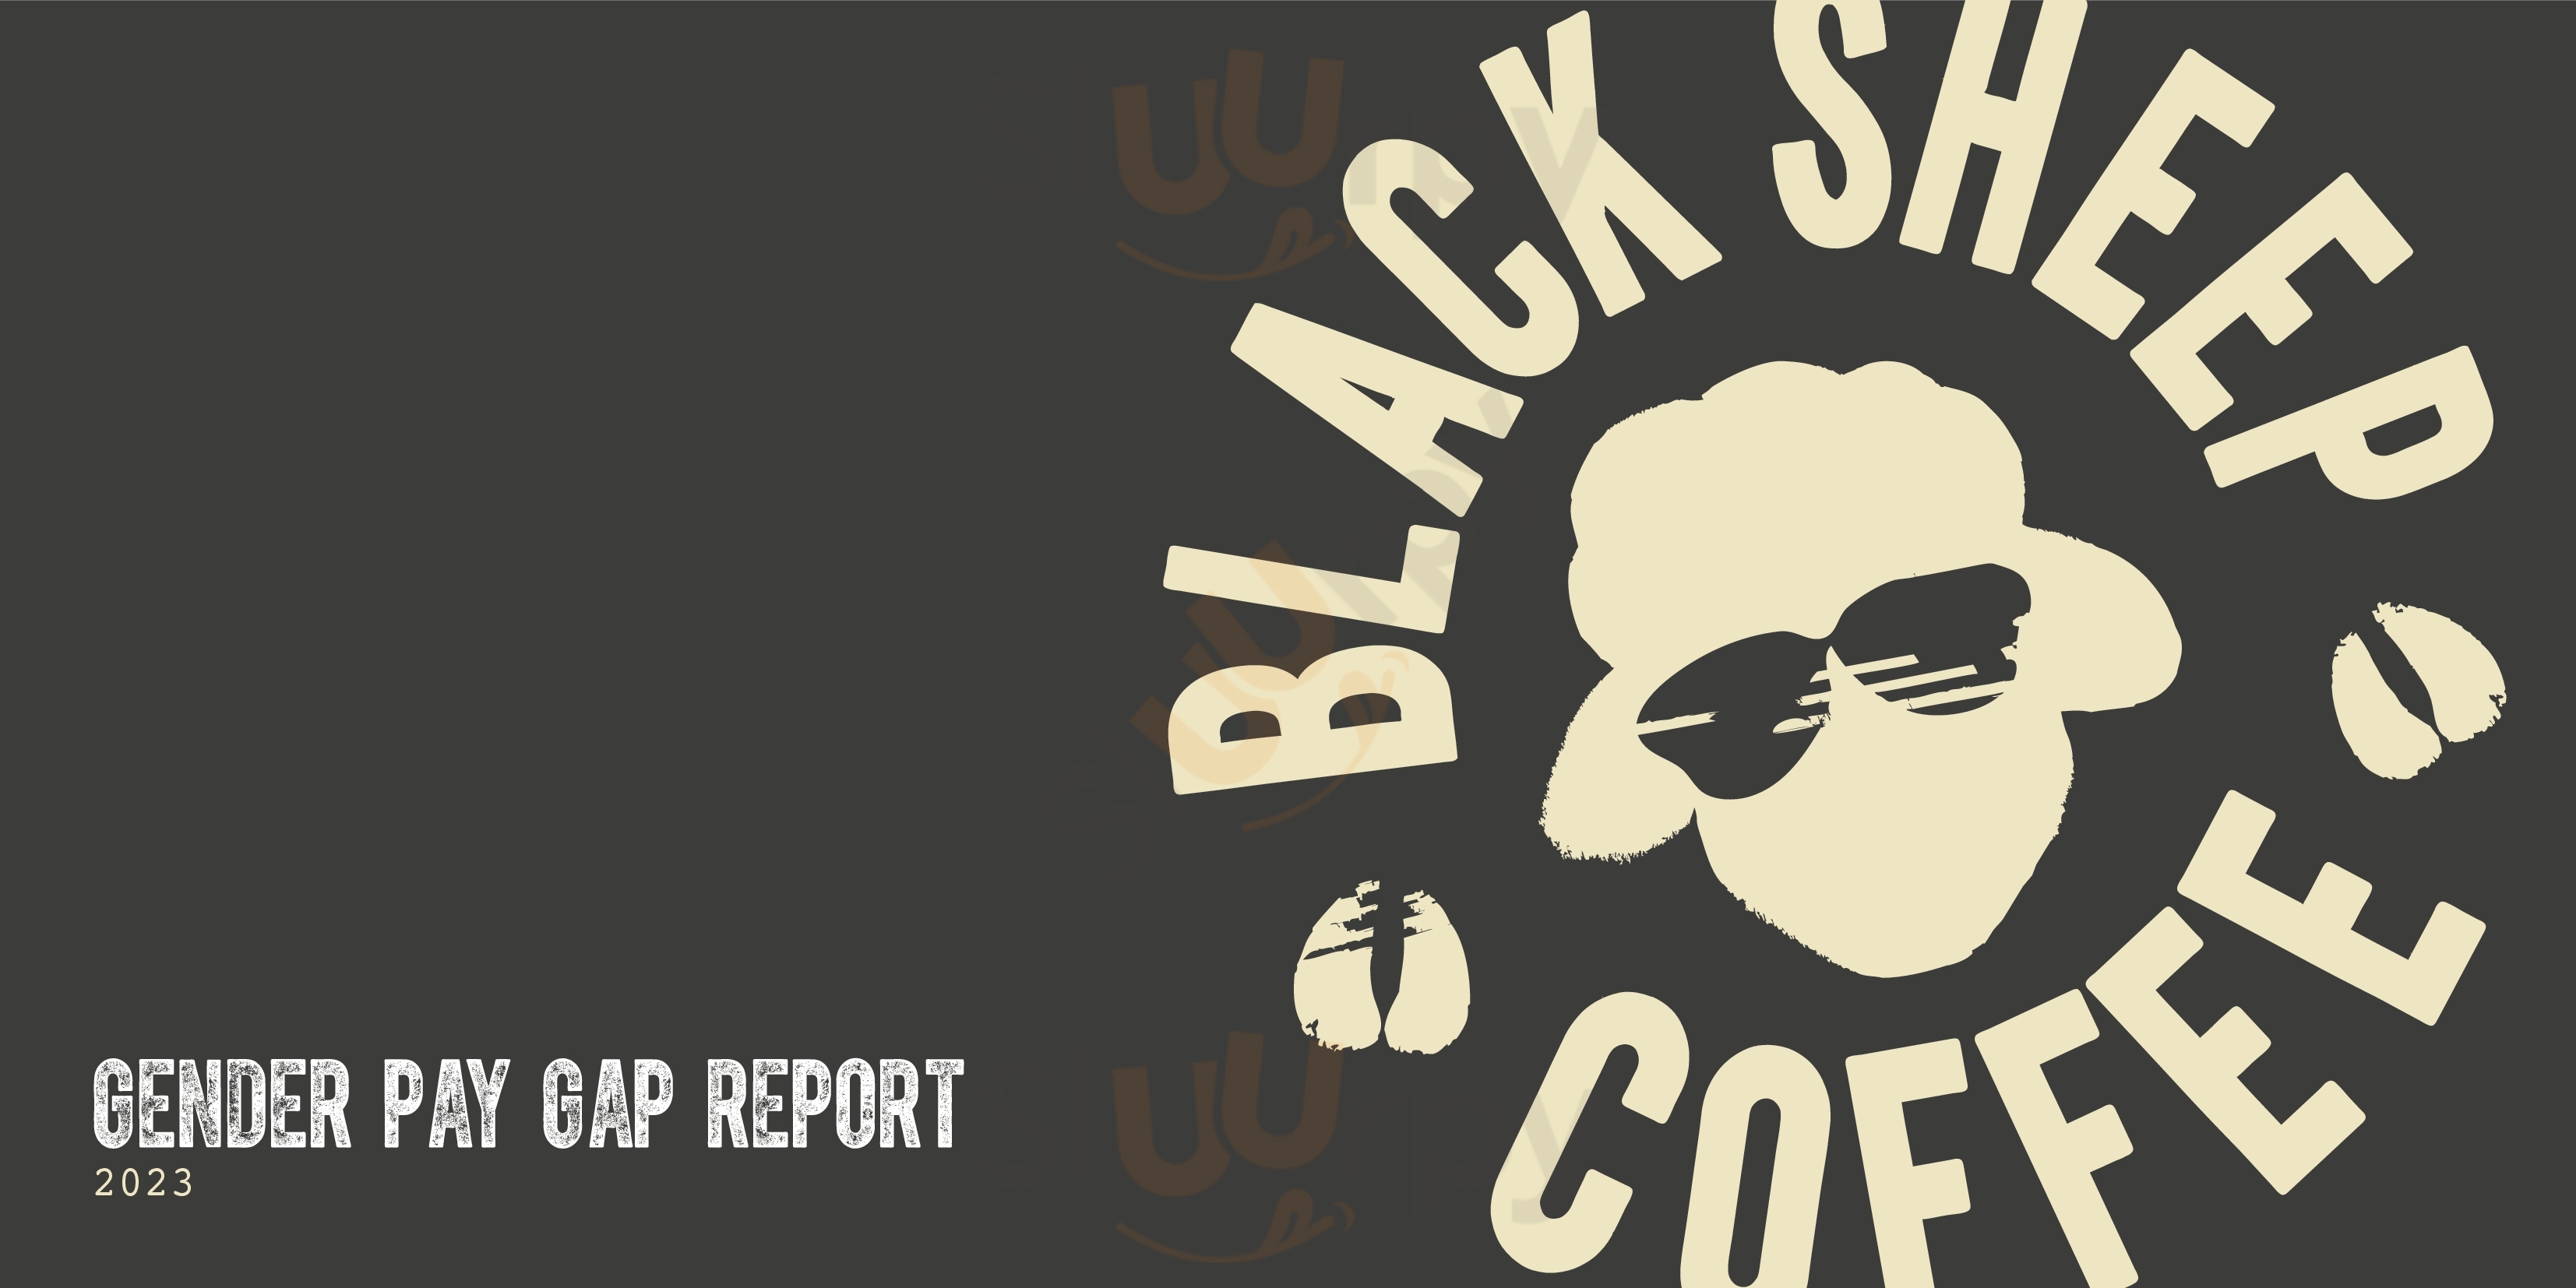 Black Sheep Coffee London Menu - 1